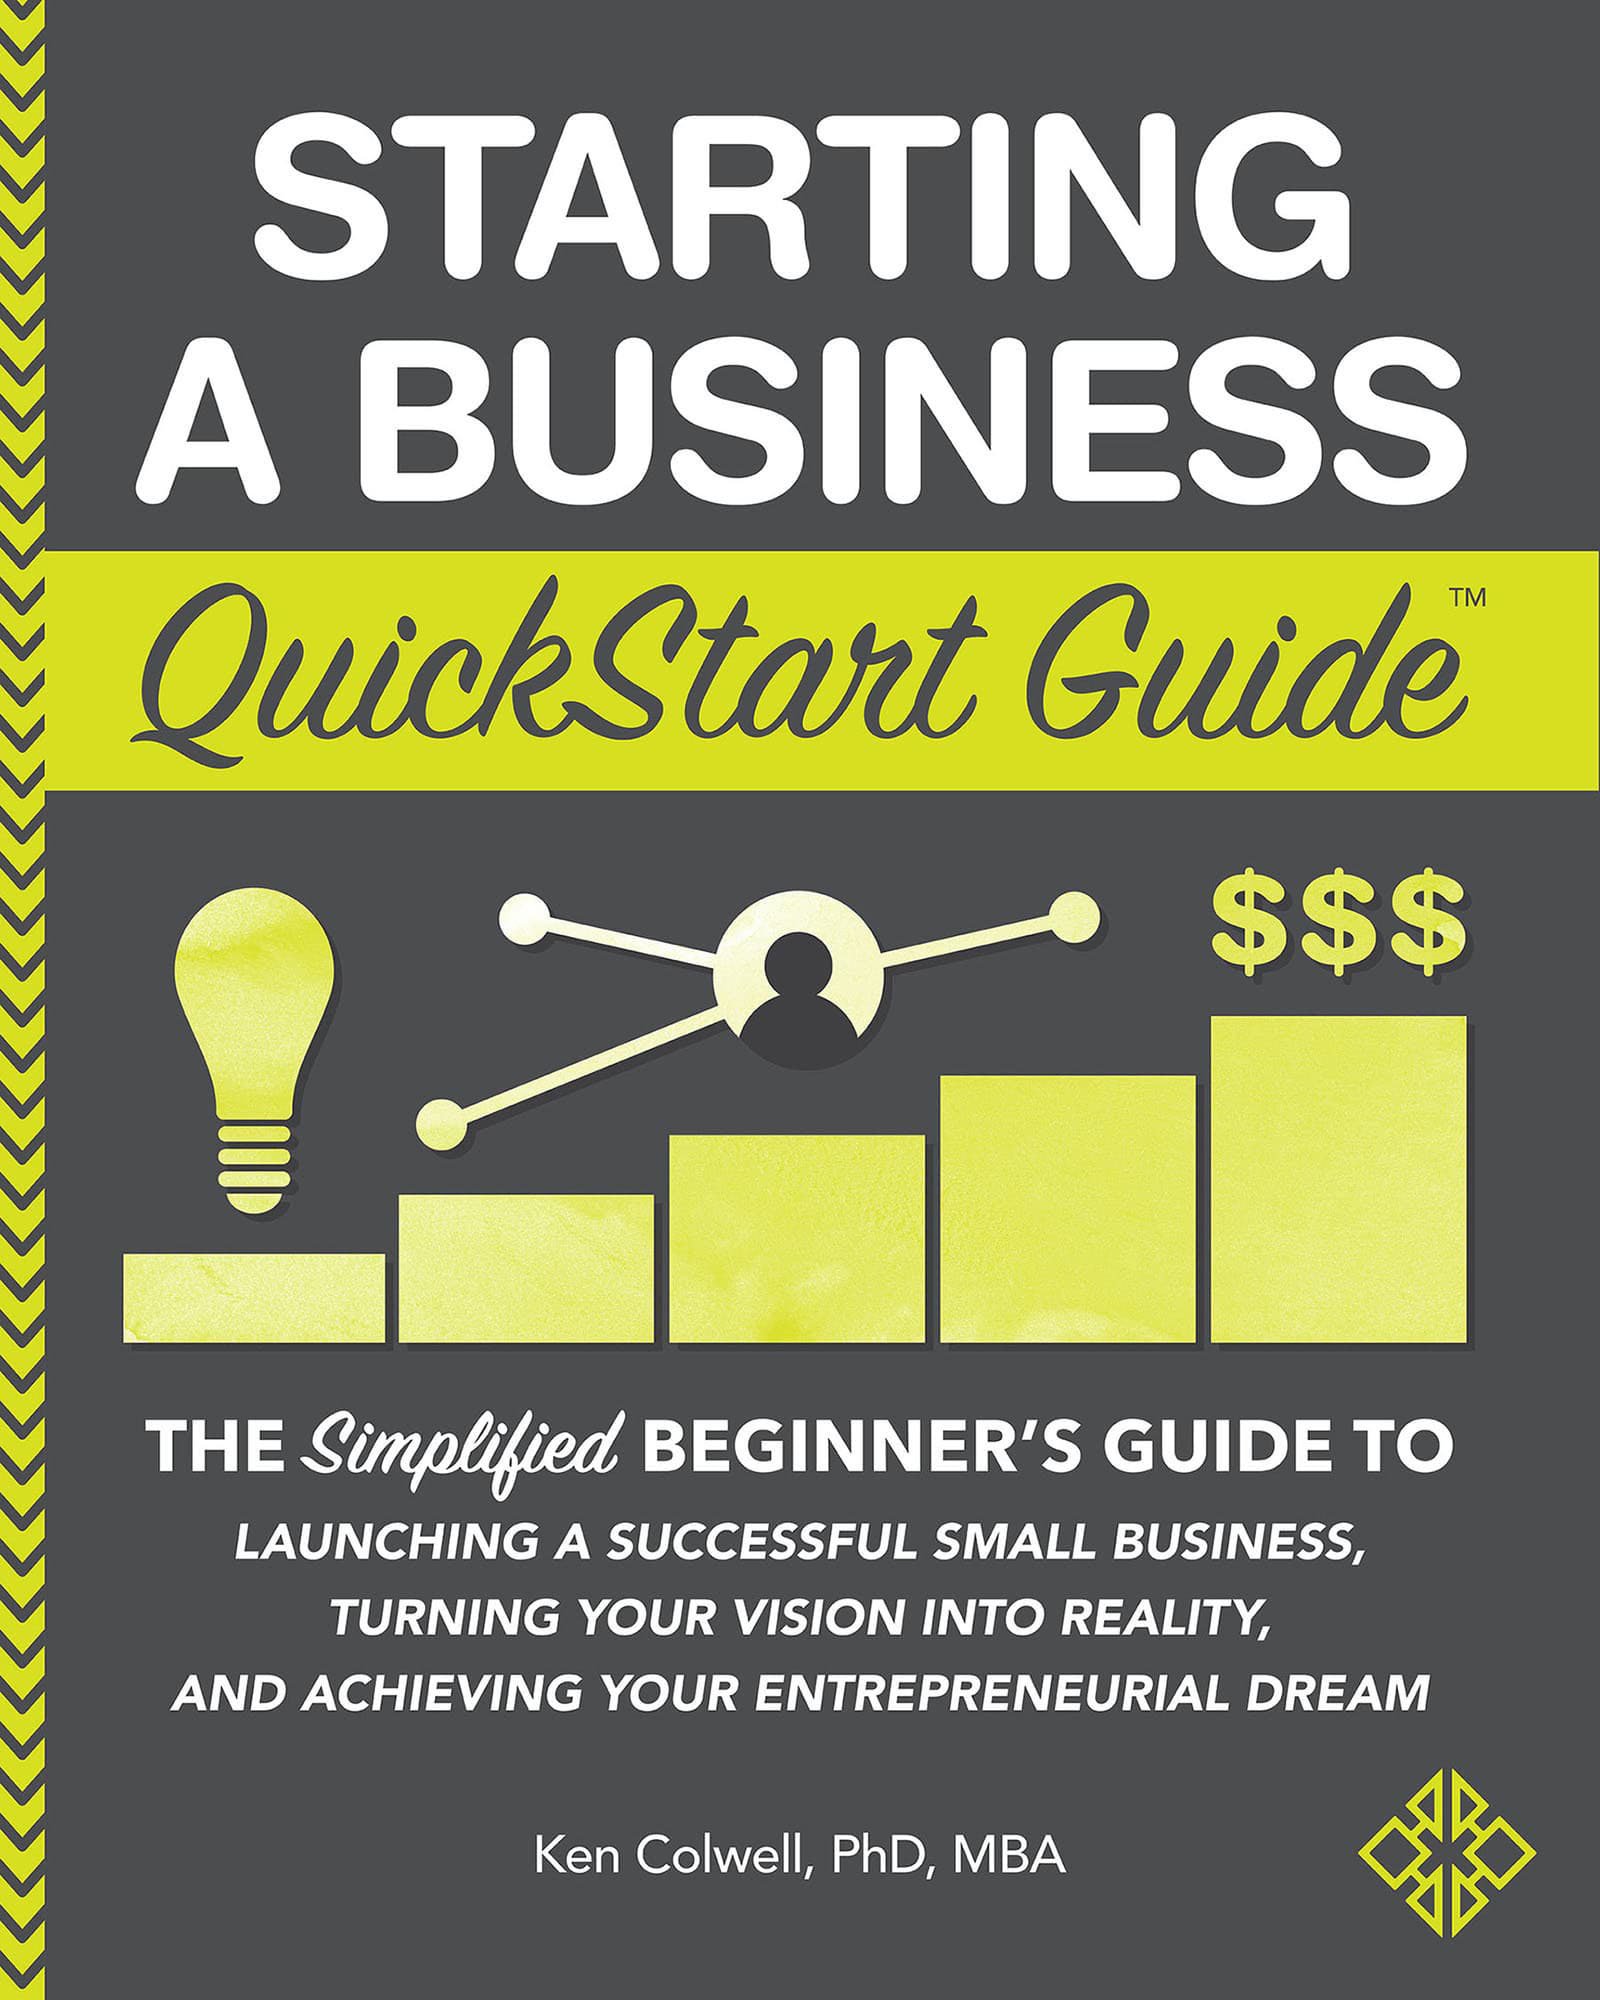 starting a business quickstart guide pdf free download